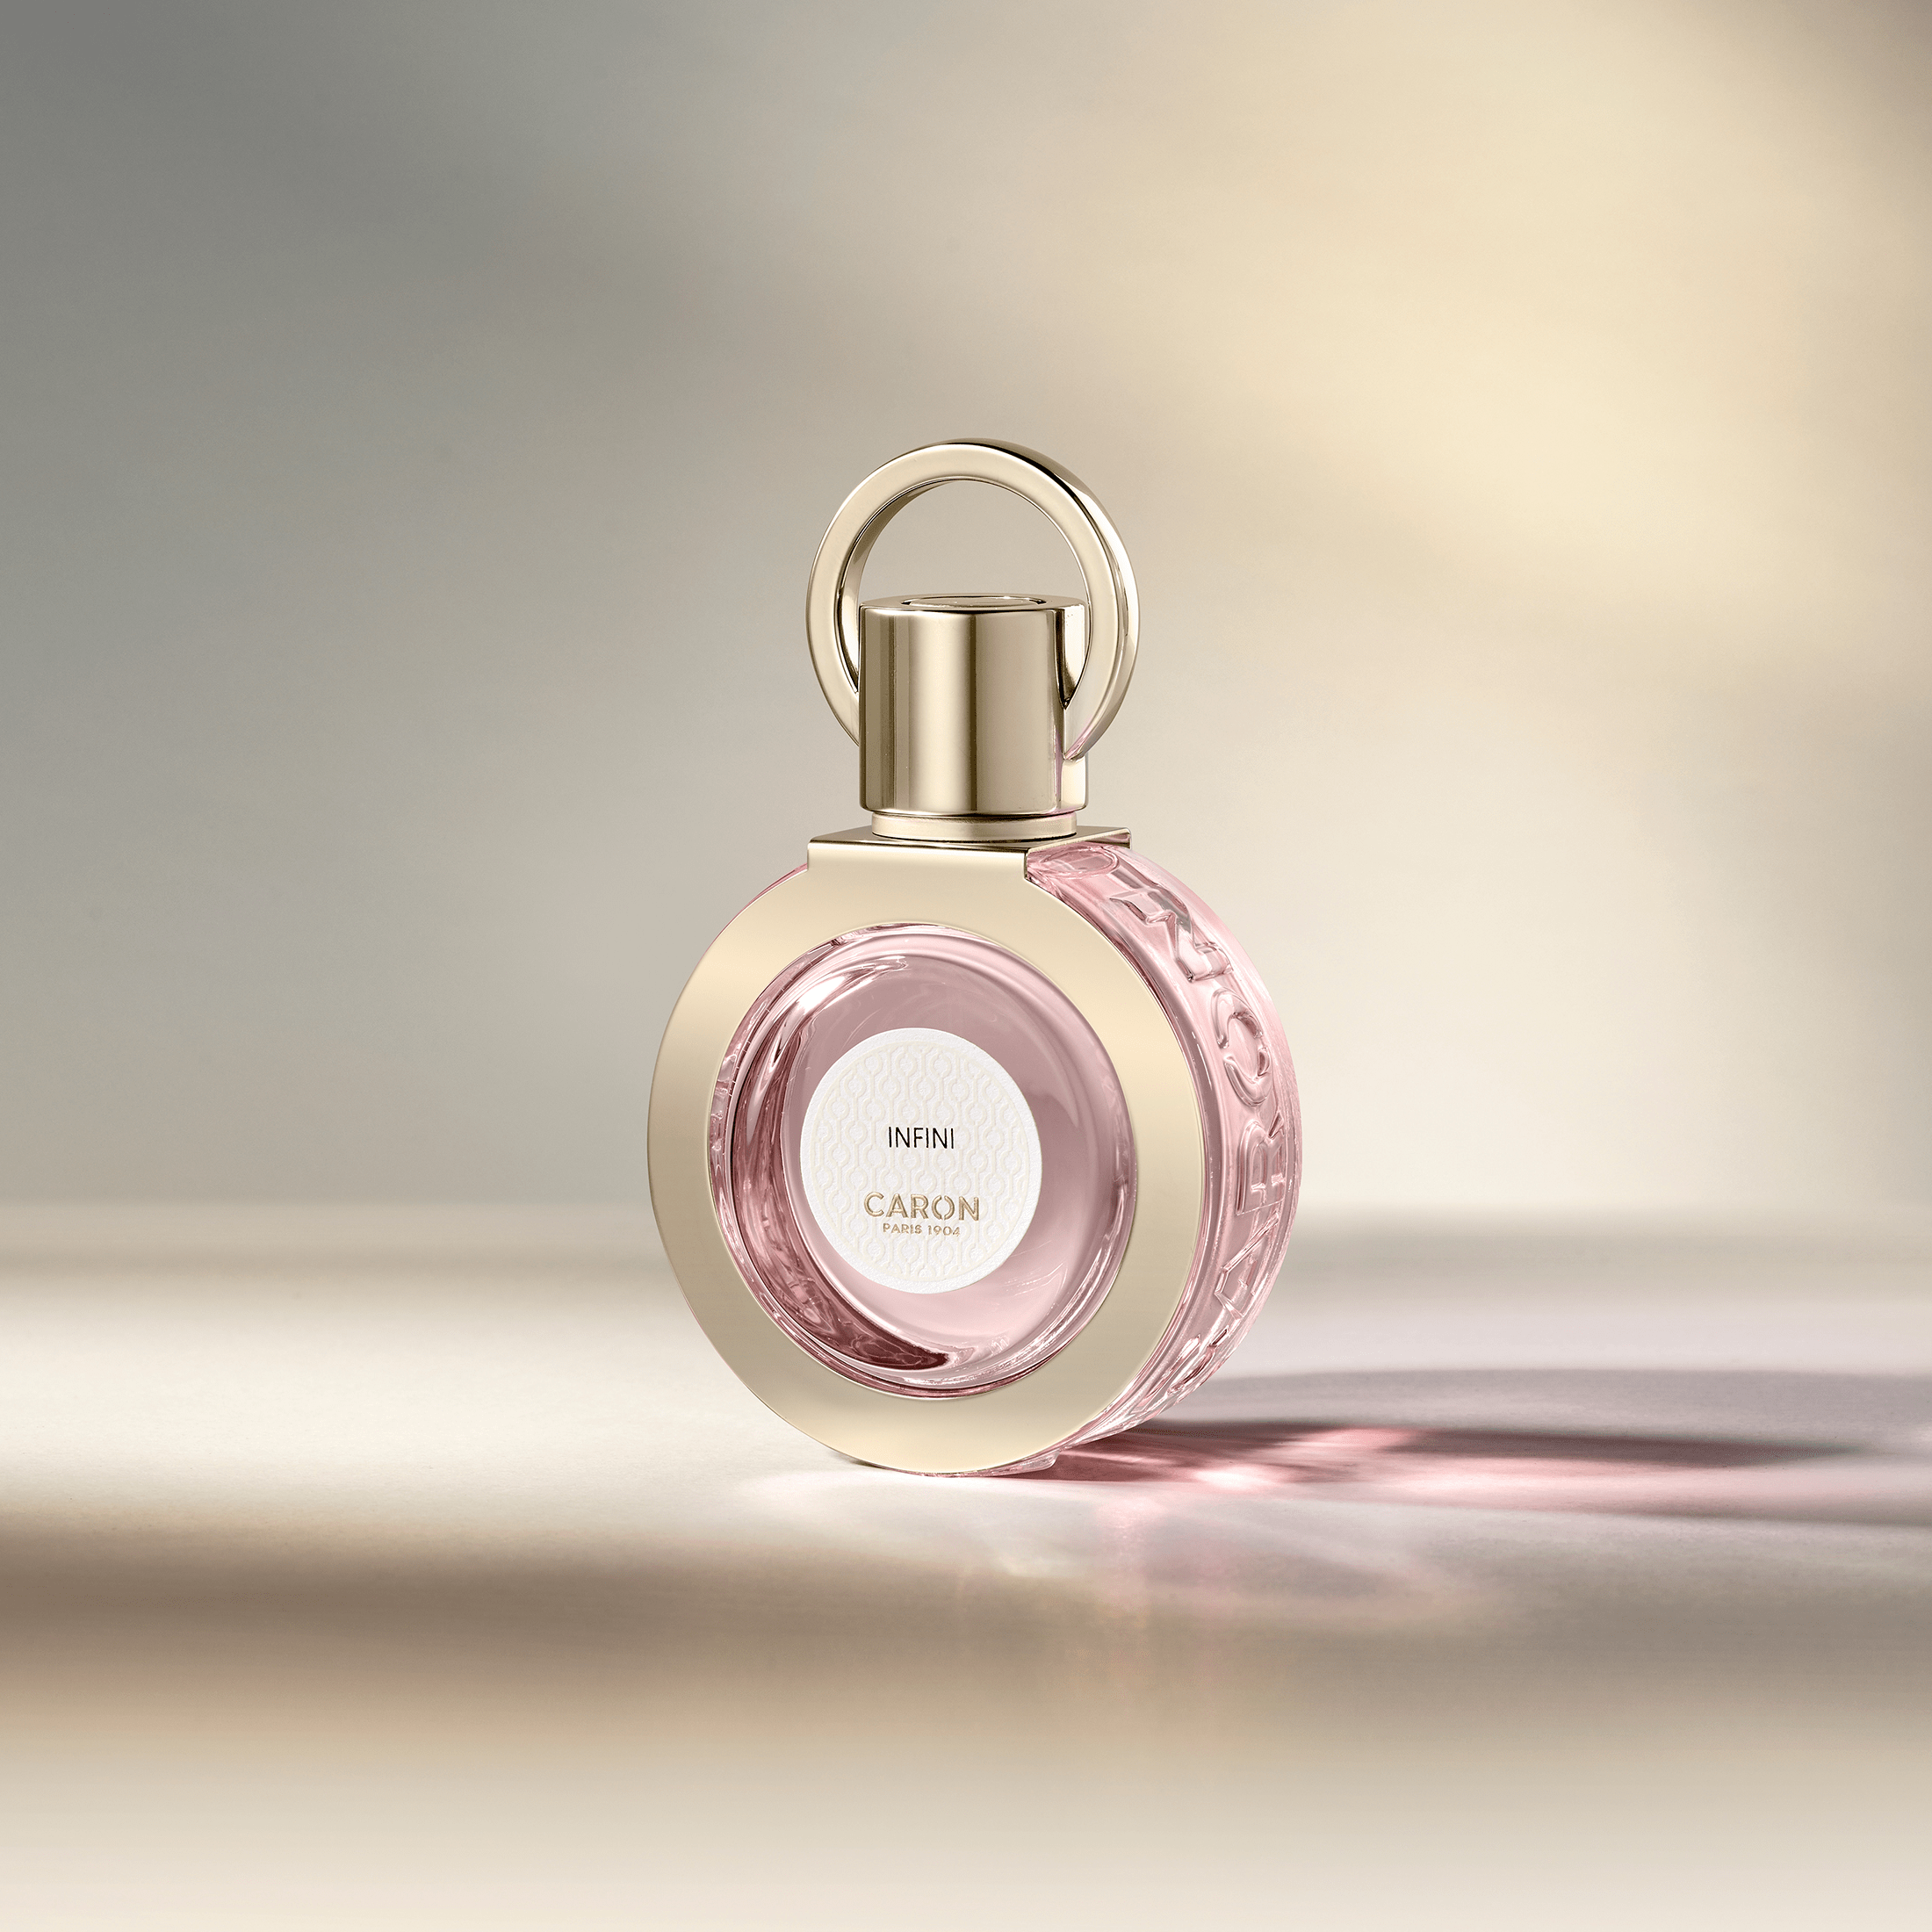 Les Parfums Louis Vuitton For Mother's Day